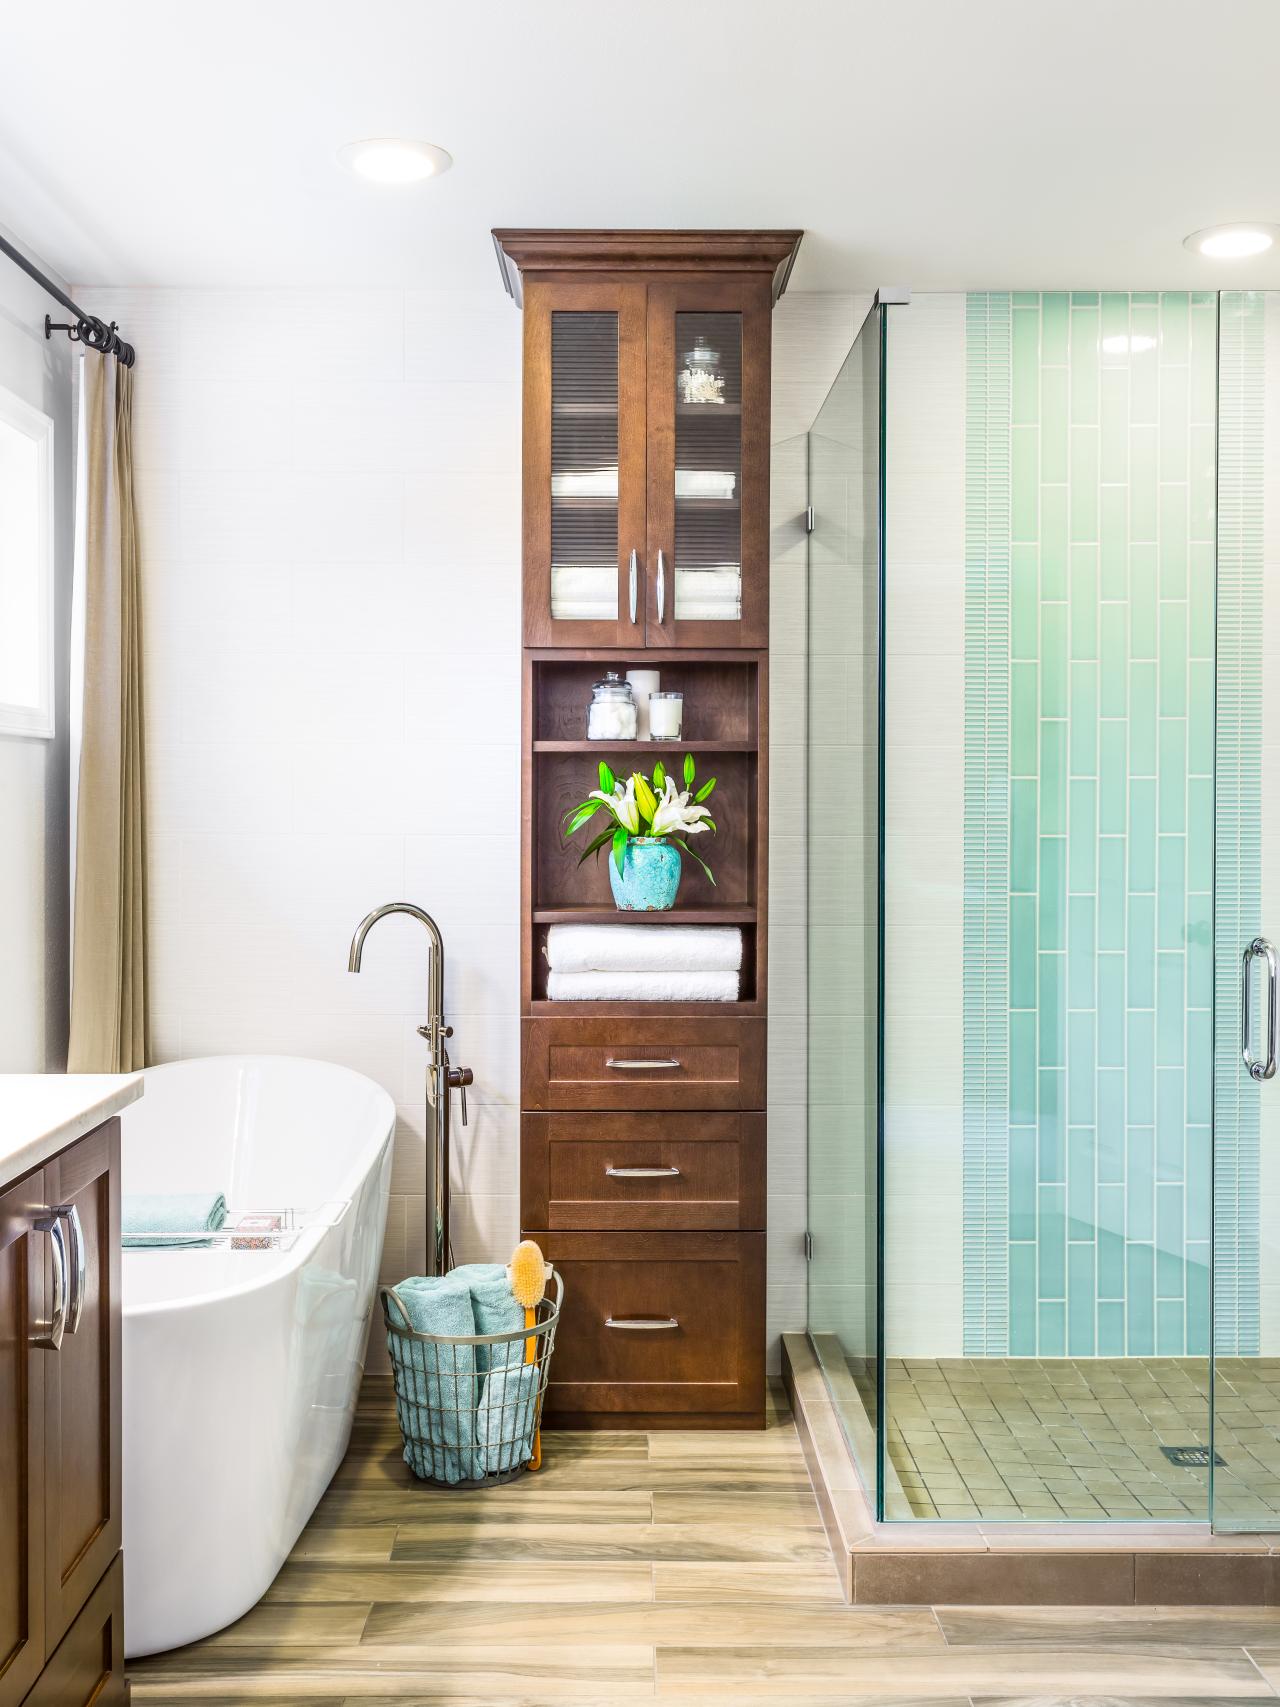 Bathroom storage ideas: 38 sleek solutions for a clear space